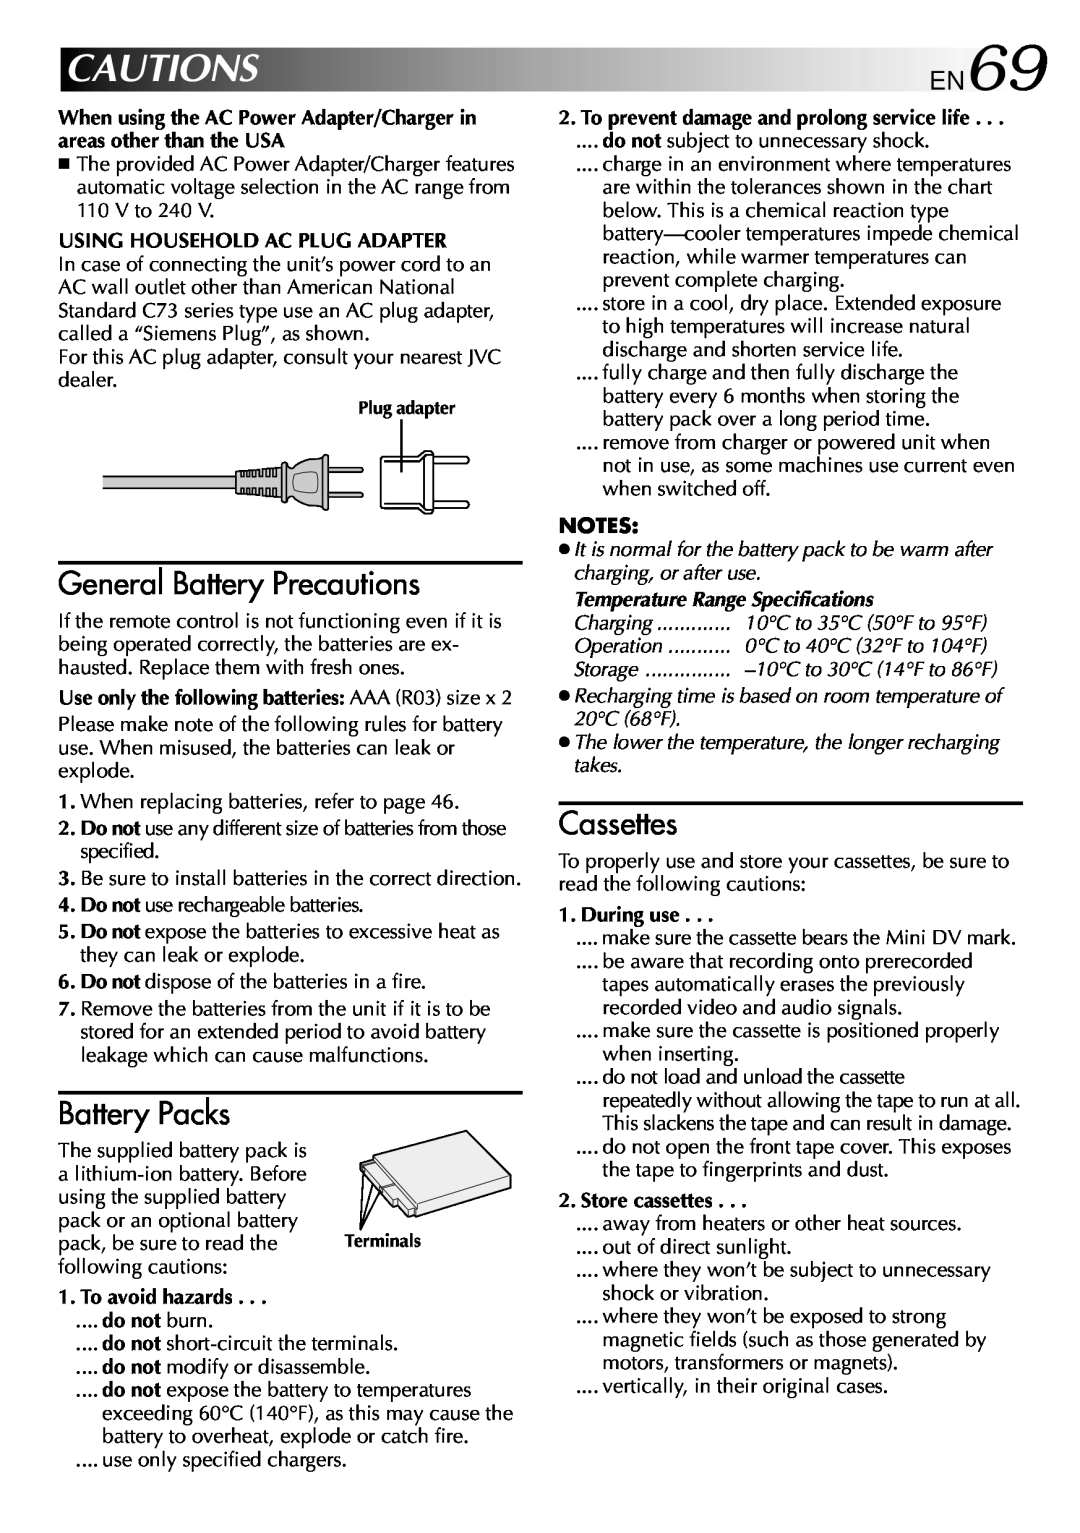 JVC GRDVM80U Cautions, General Battery Precautions, Battery Packs, Cassettes, EN69, Temperature Range Specifications 